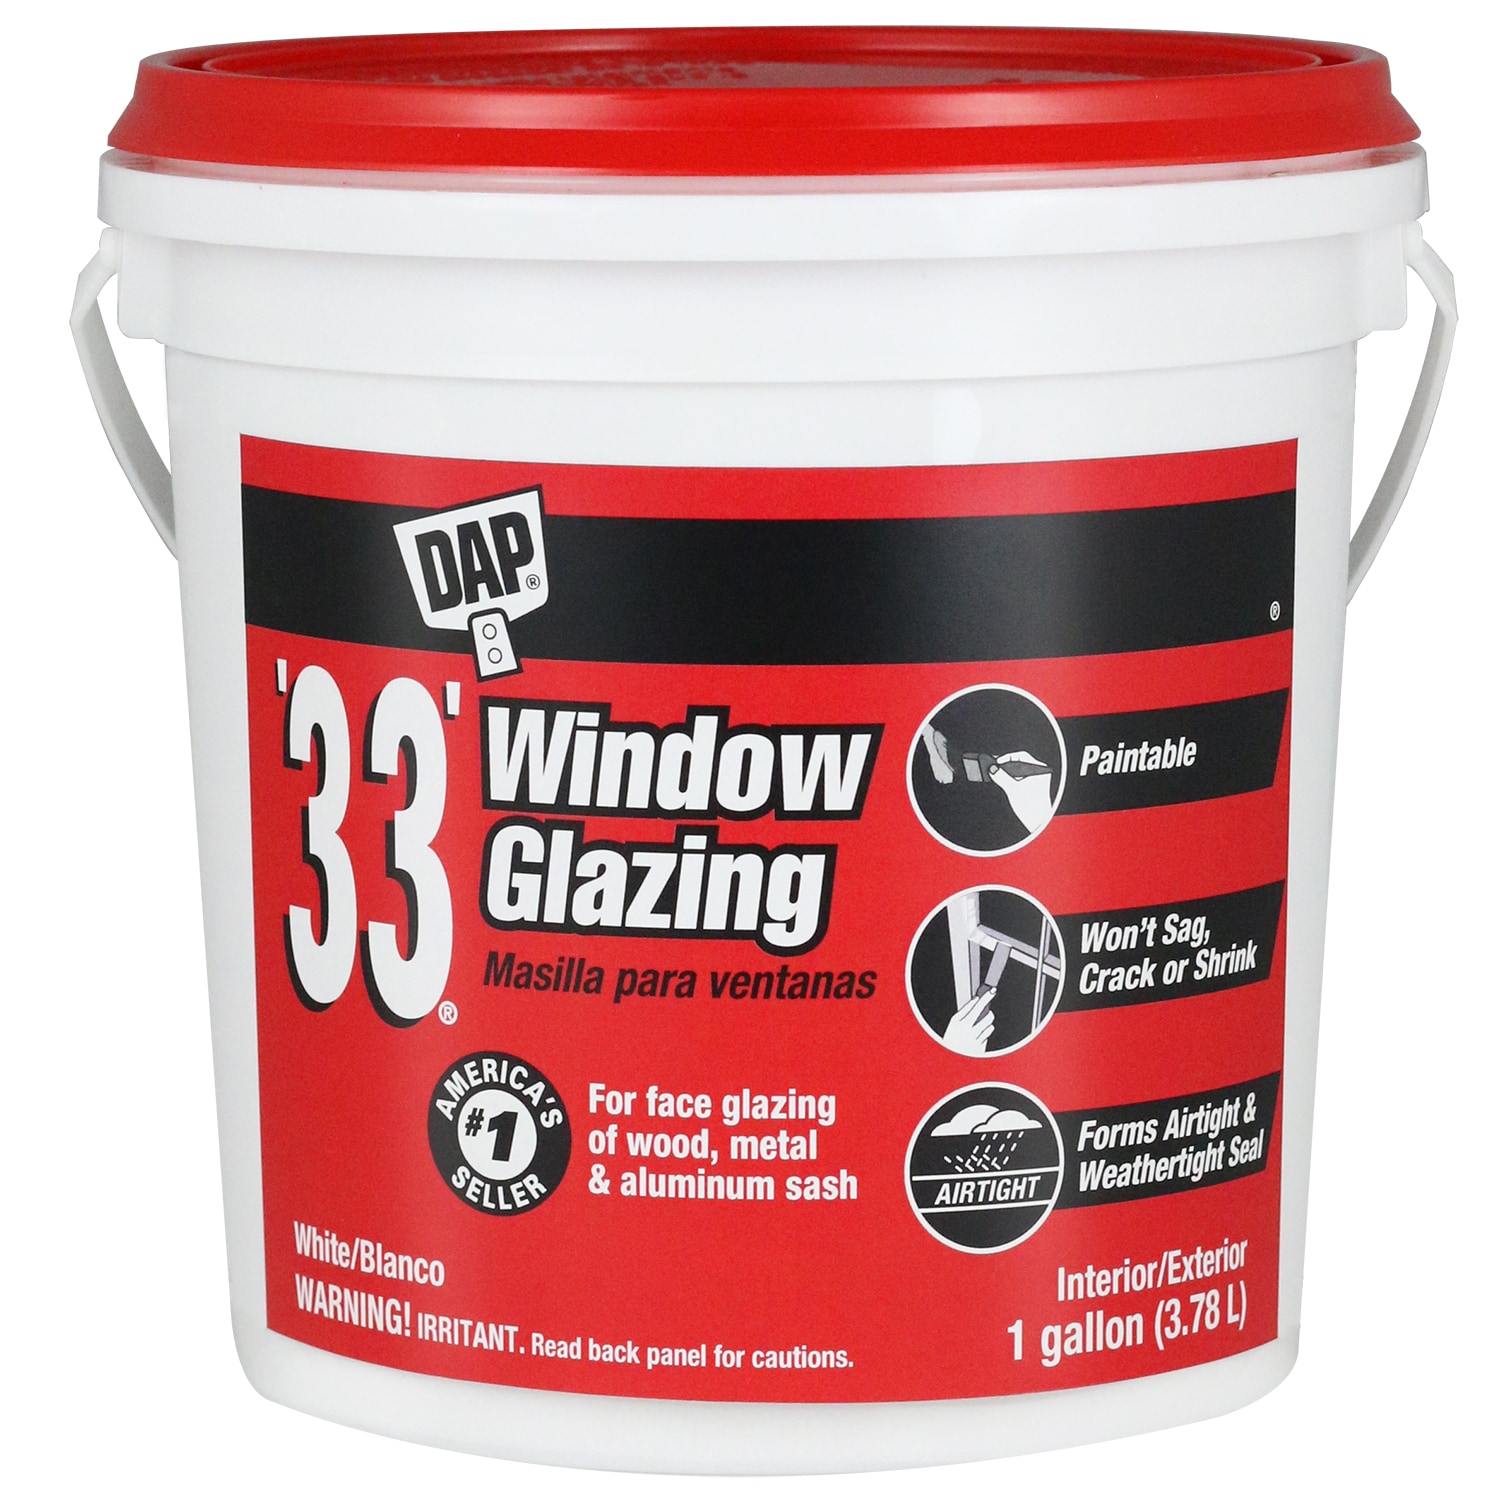 Bondo Glazing and Spot Putty 4.5-oz Waterproof Interior/Exterior